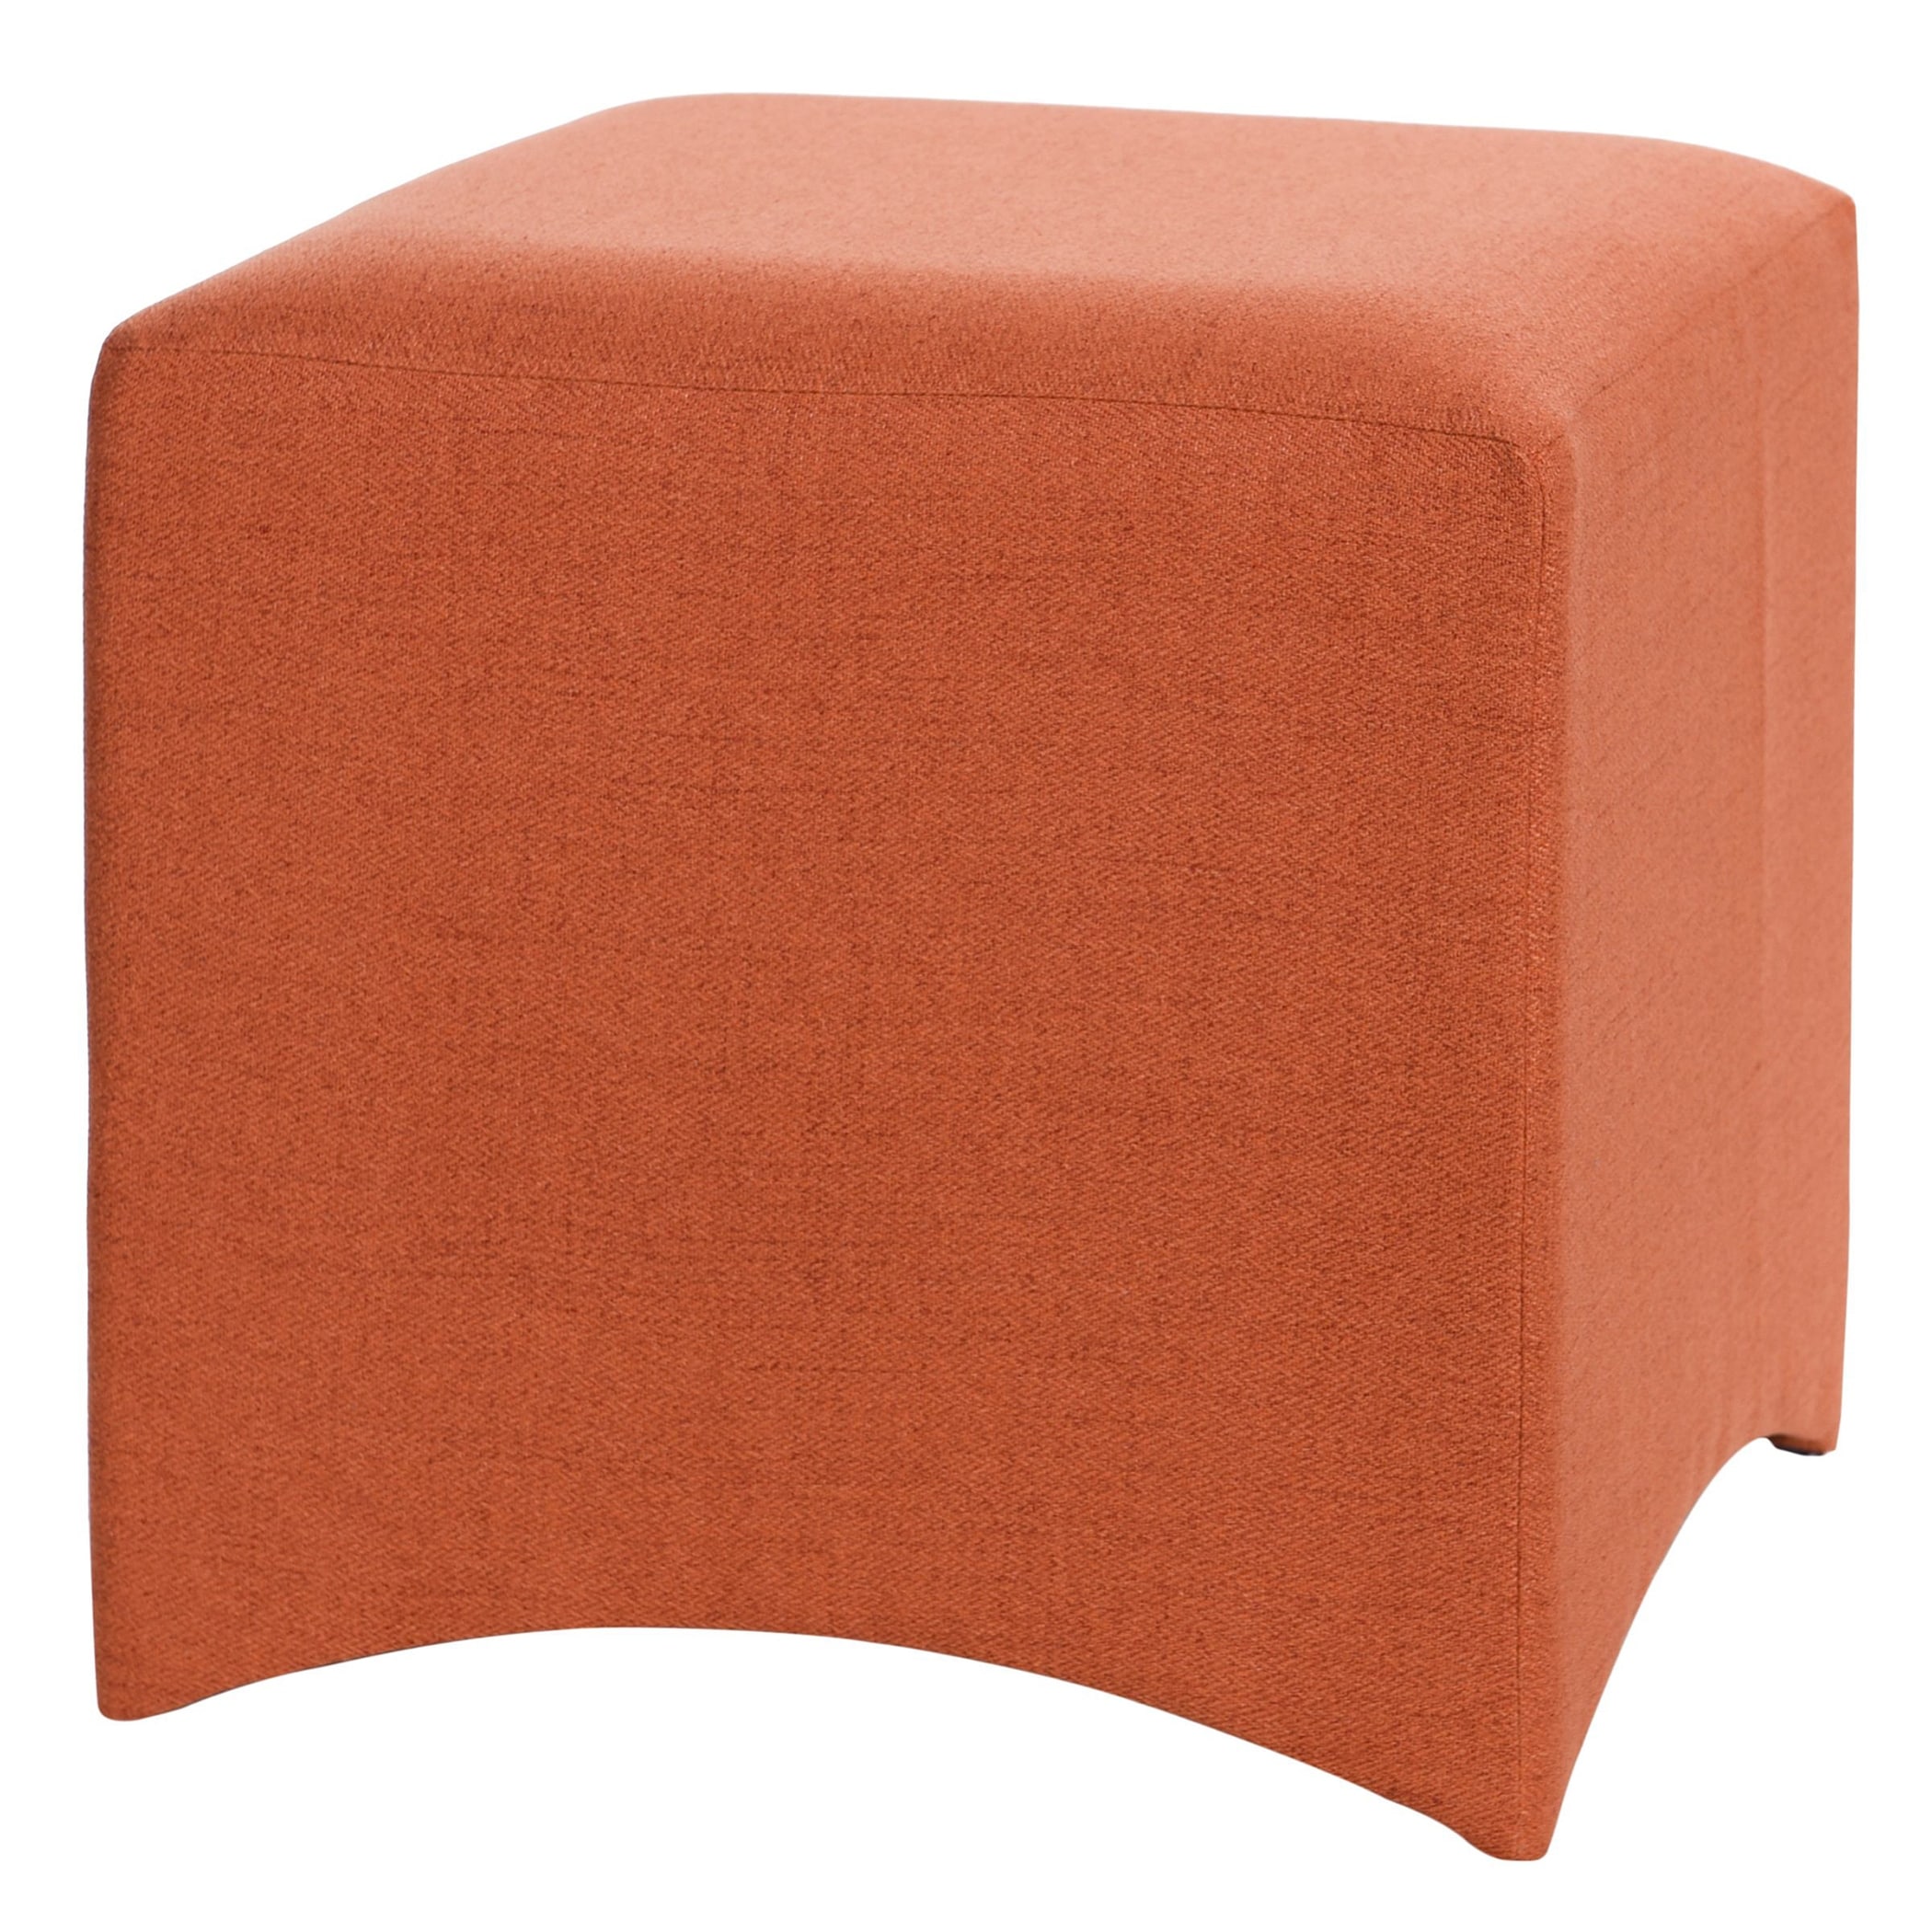 StyleCraft Dann Foley - Stool with Burnt Orange Linen Upholstery